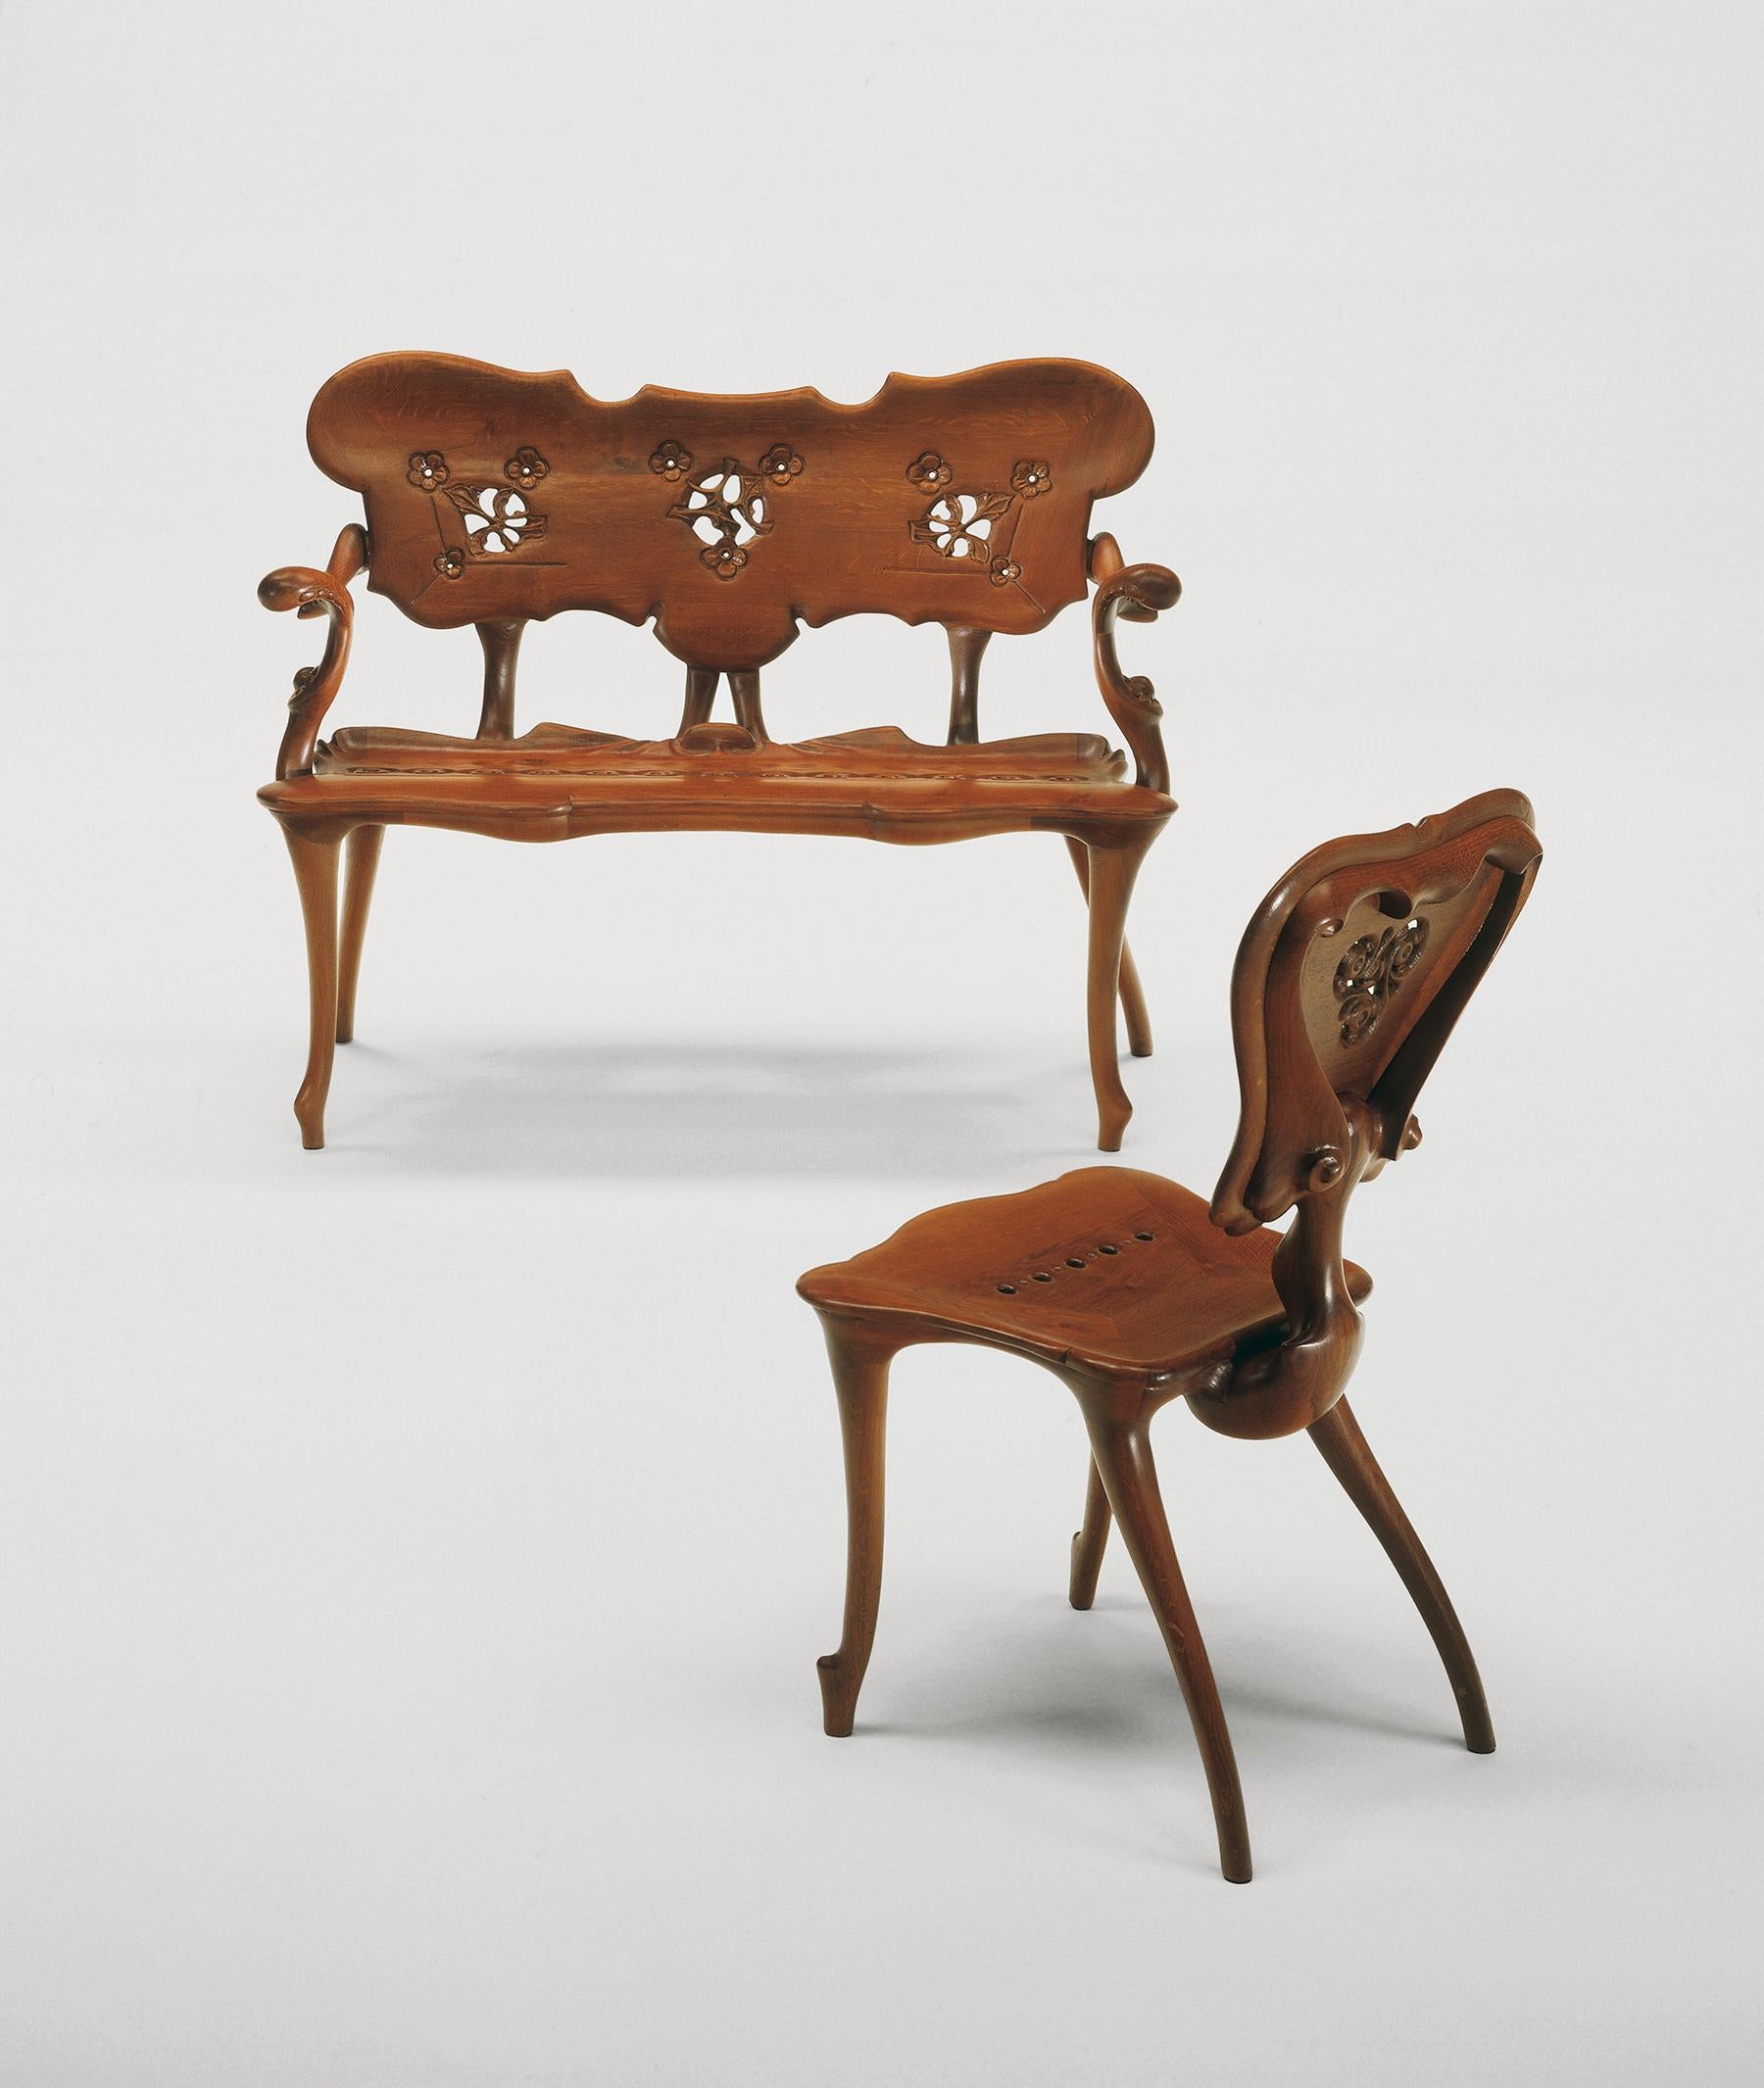 Oak Calvet chair in solid oak by Antoni Gaudí 20th century Spanish modernist design  For Sale